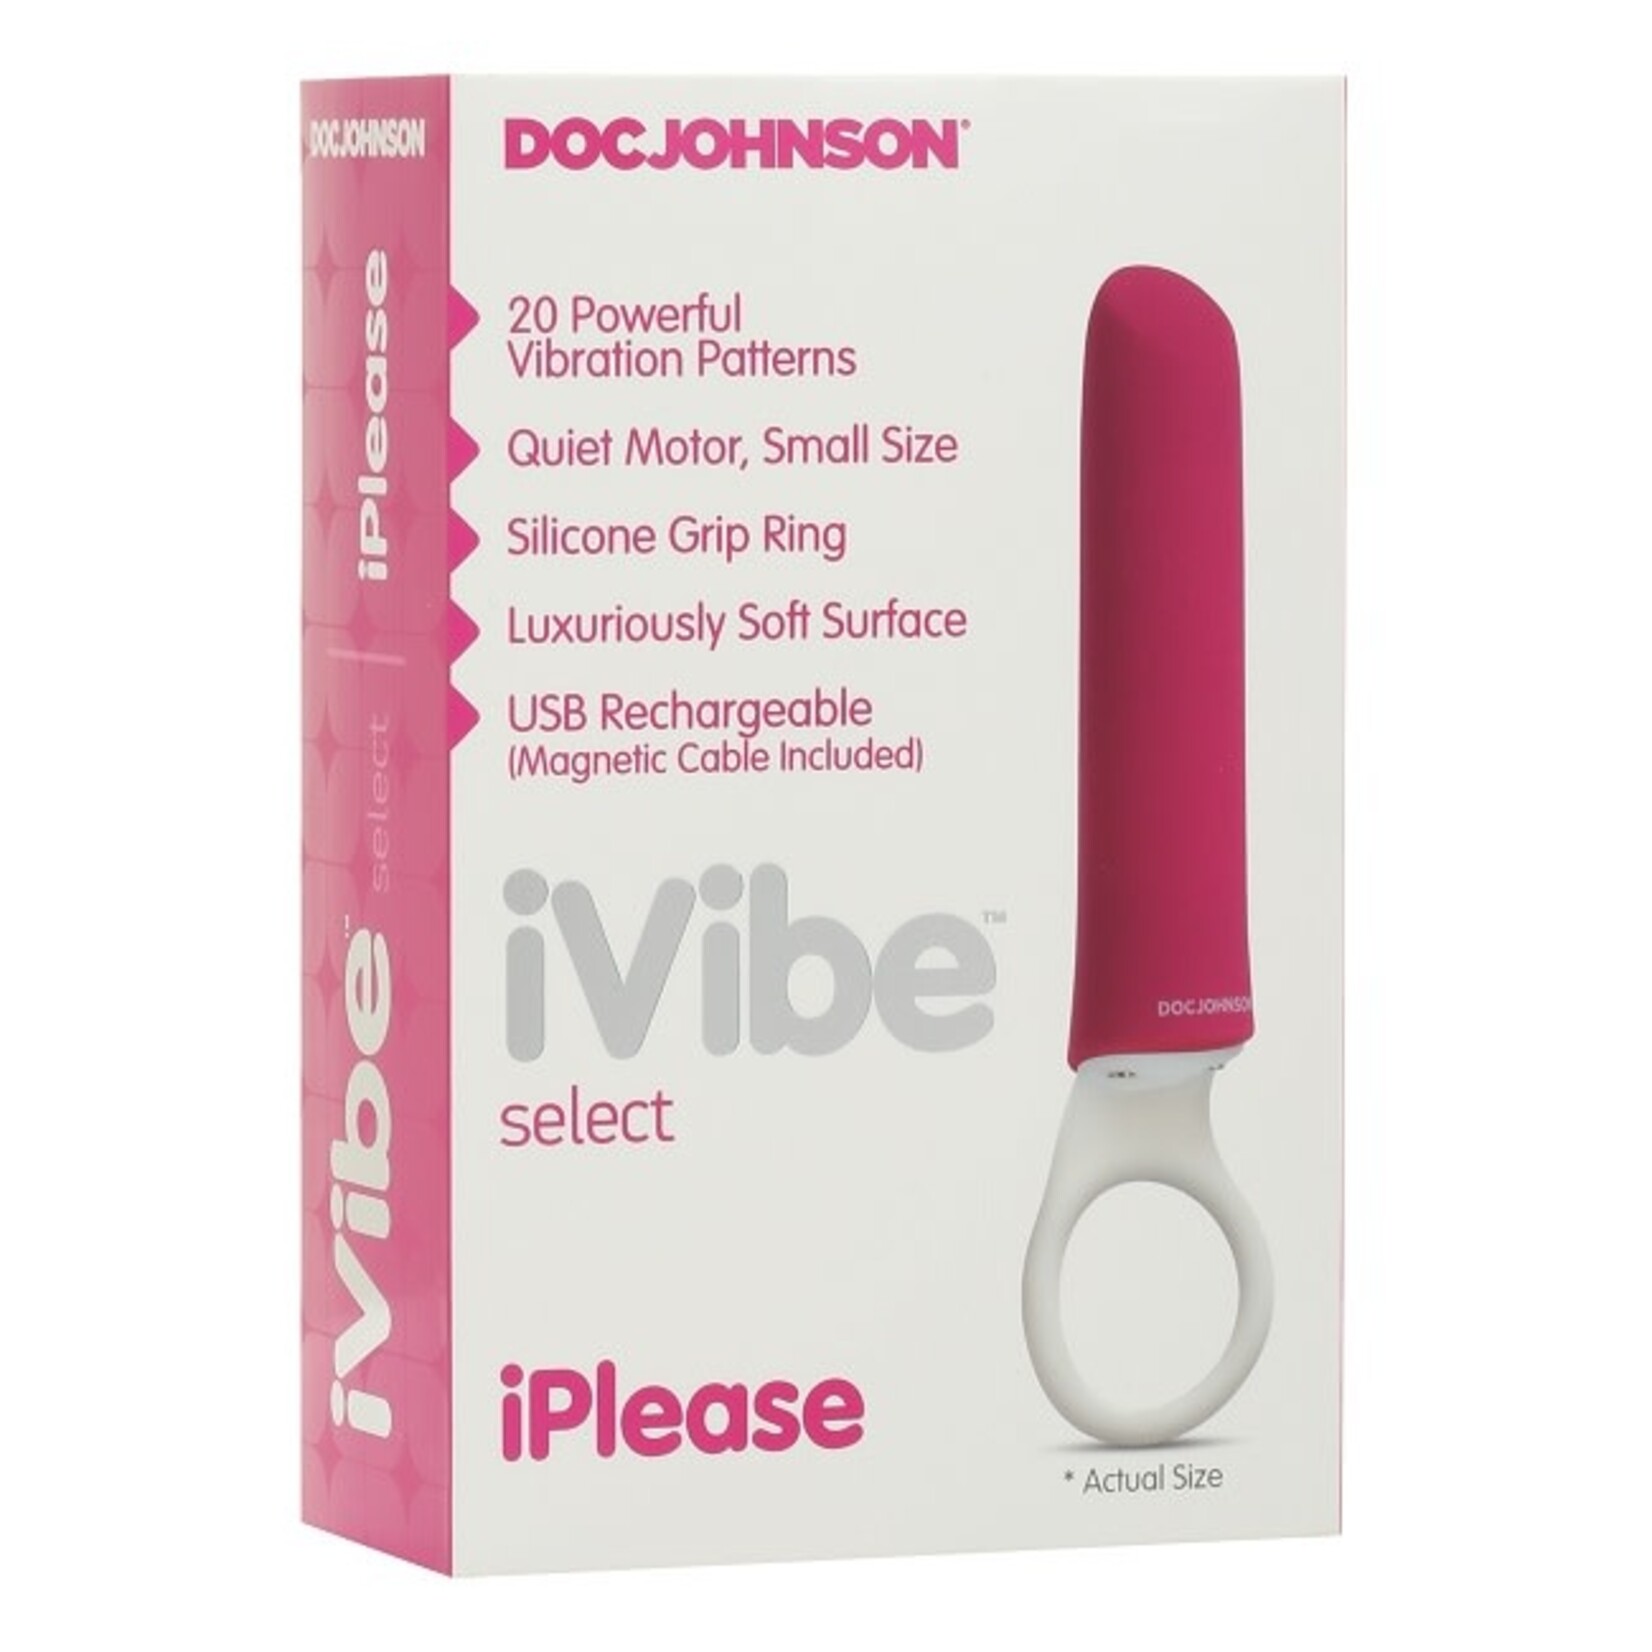 Doc Johnson iVibe Select - iPlease